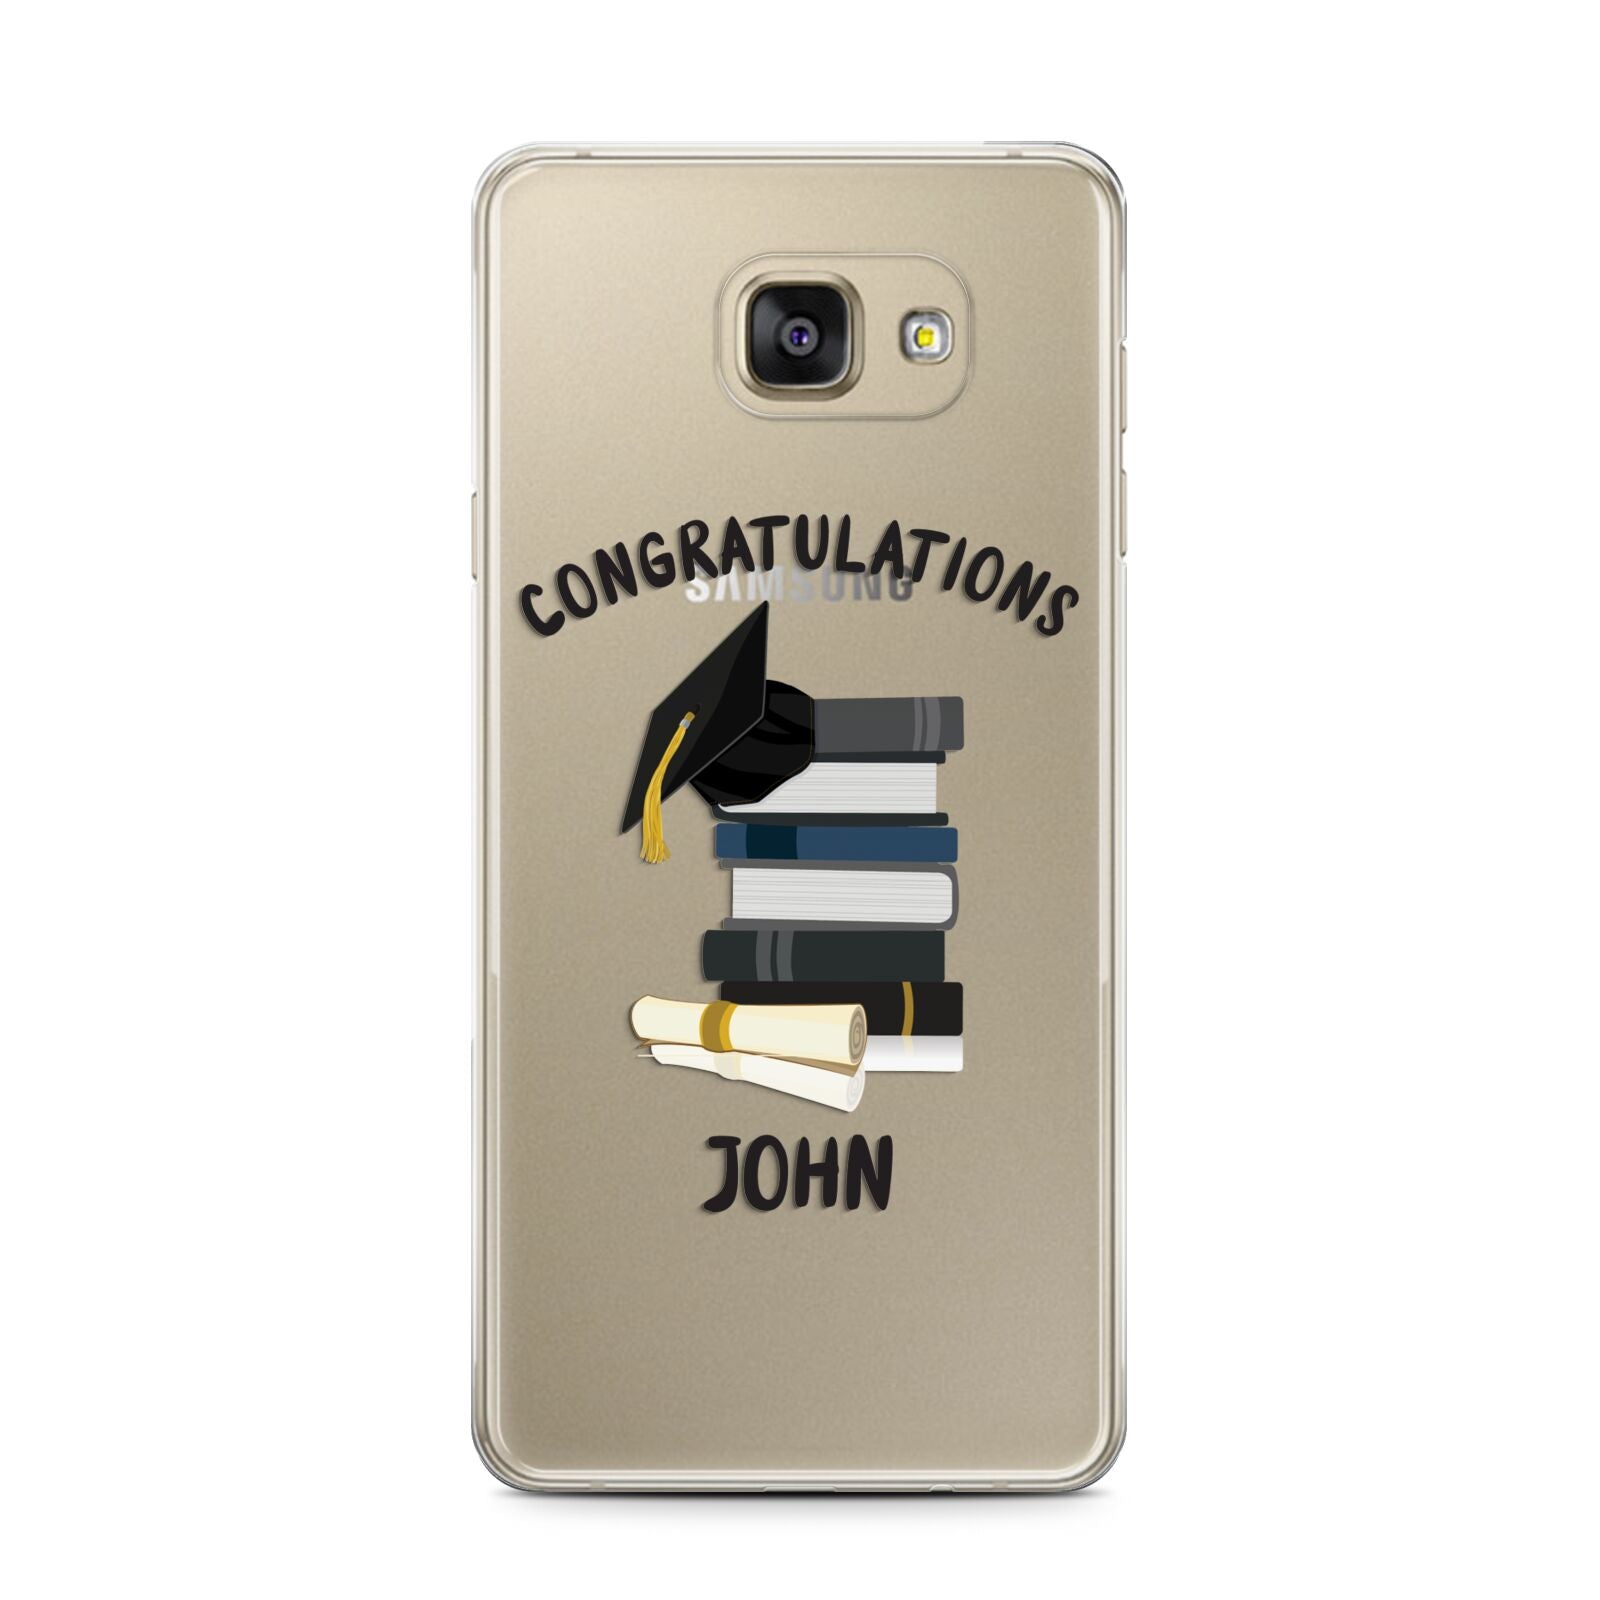 Congratulations Graduate Samsung Galaxy A7 2016 Case on gold phone